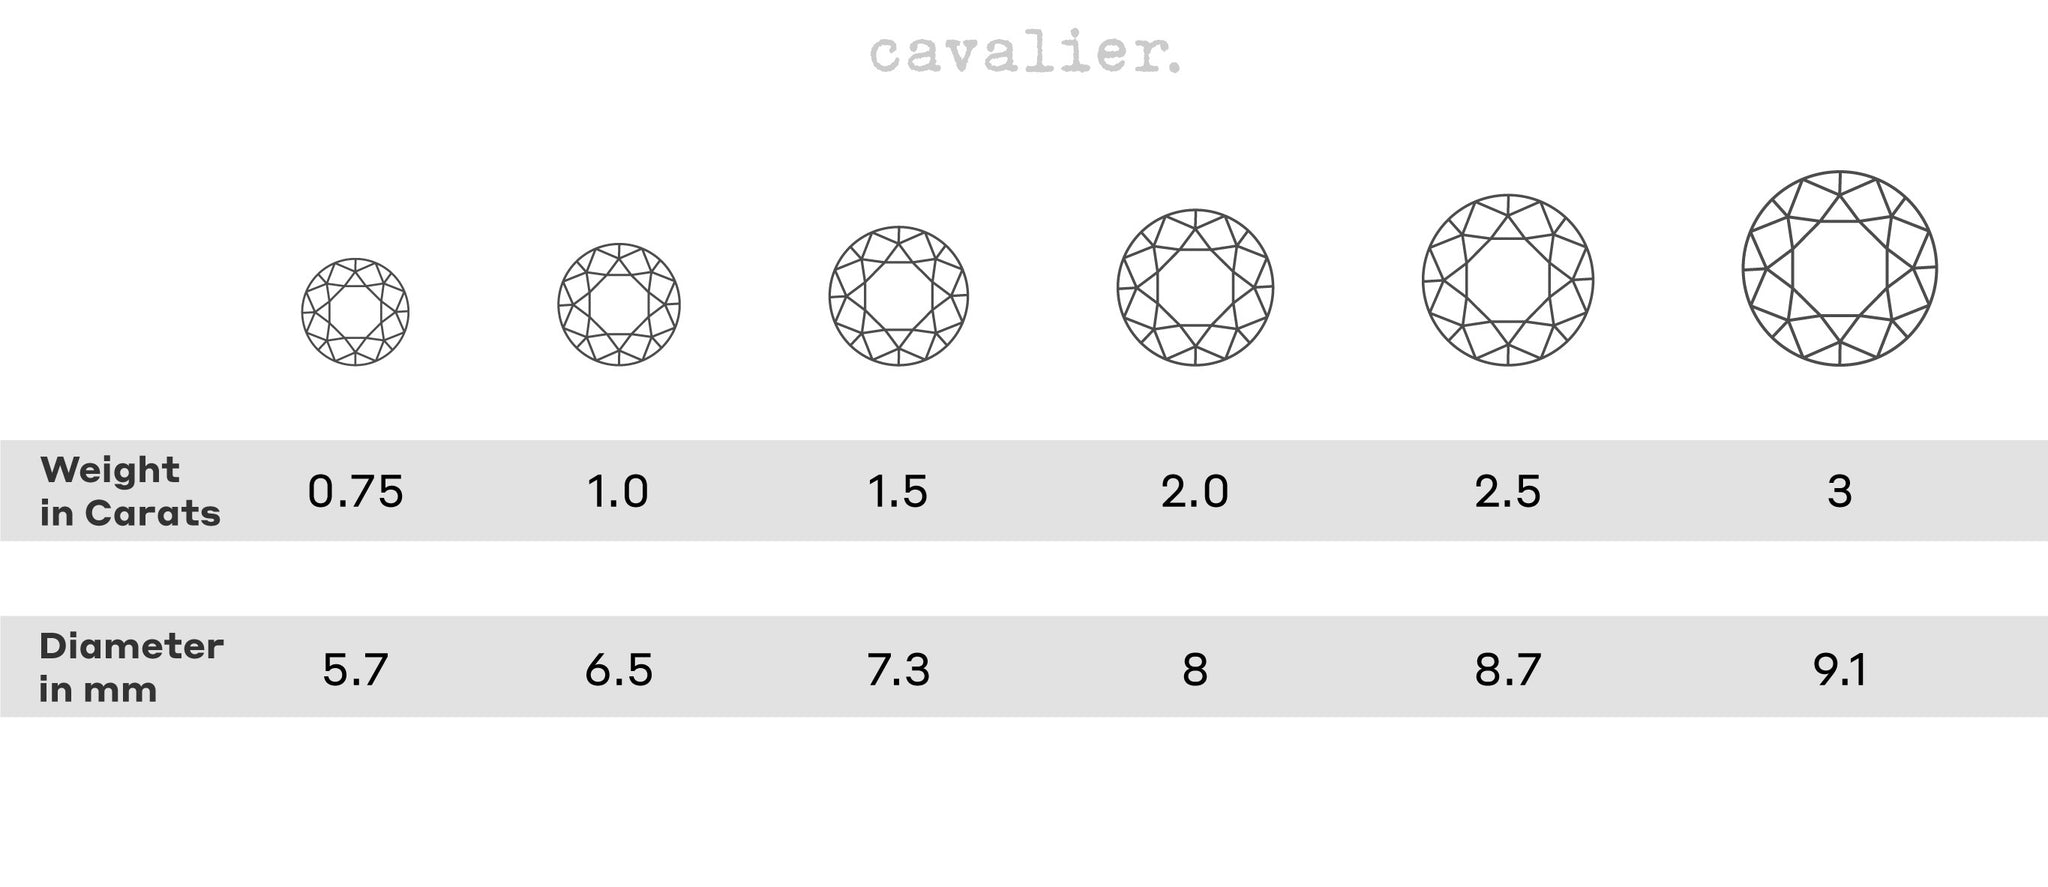 Cavalier Fine Jewelry 4C's Carat Weight Diamond Grading Chart